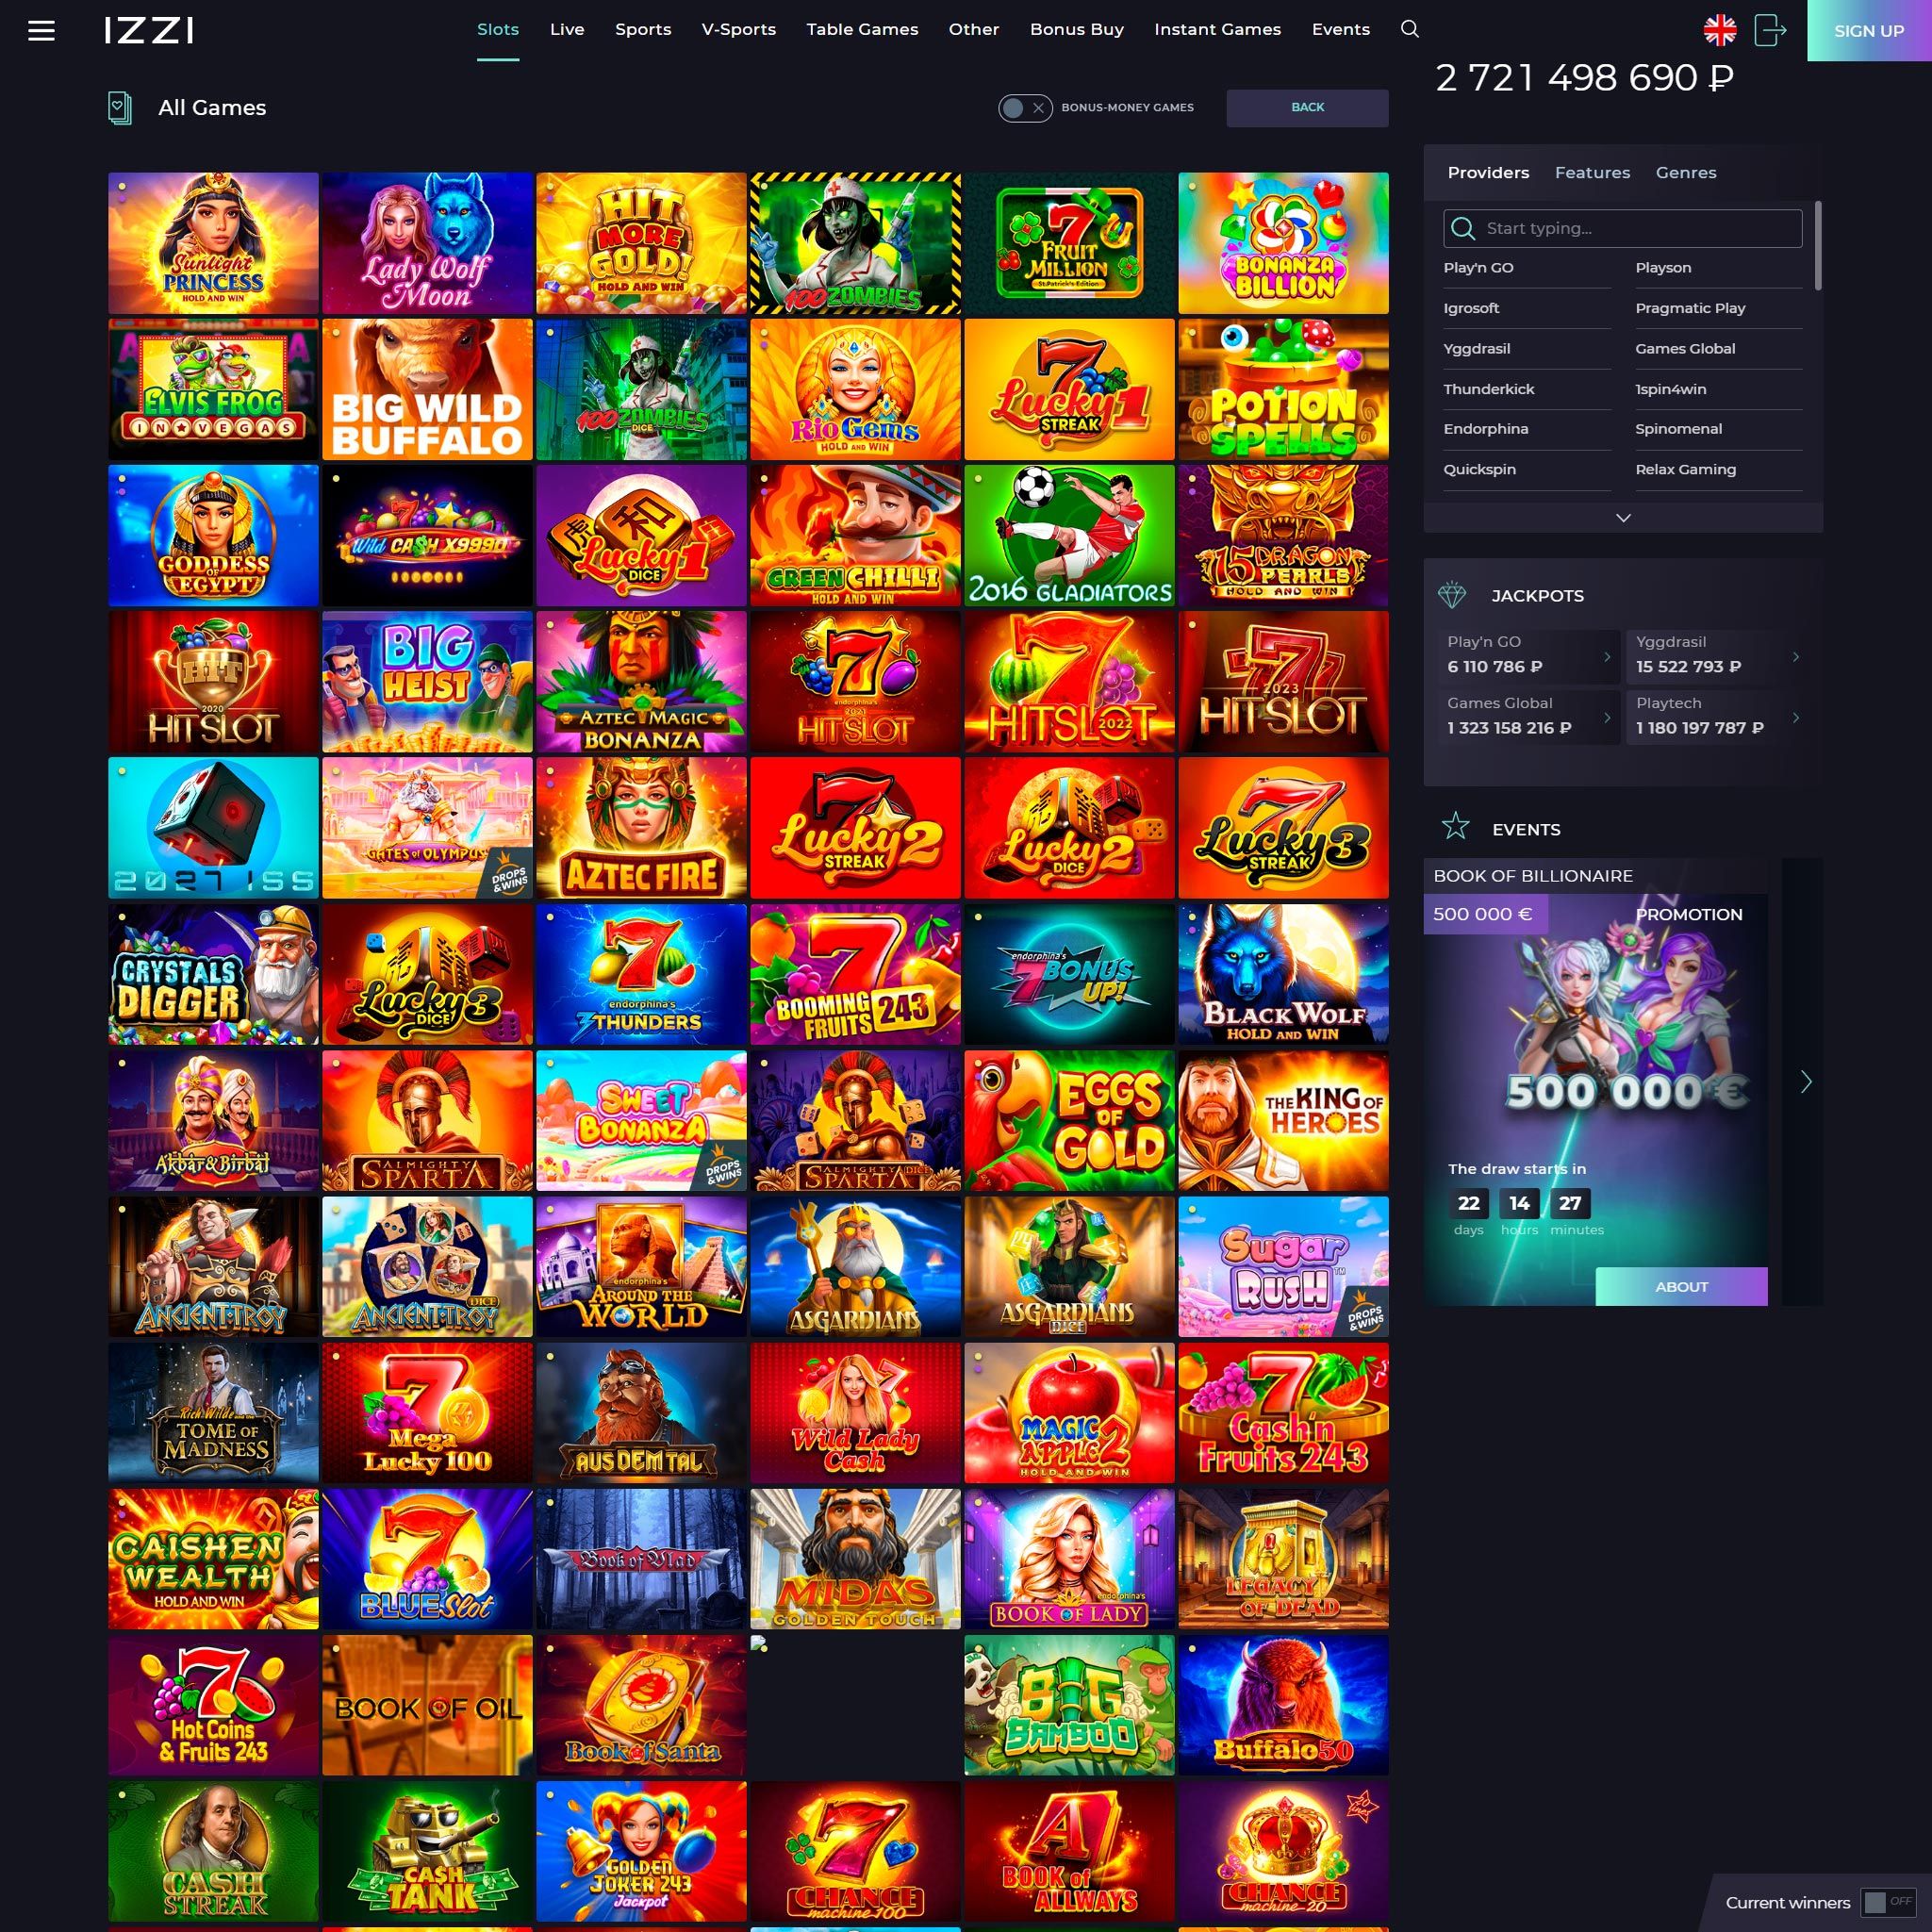 IZZI casino full games catalogue